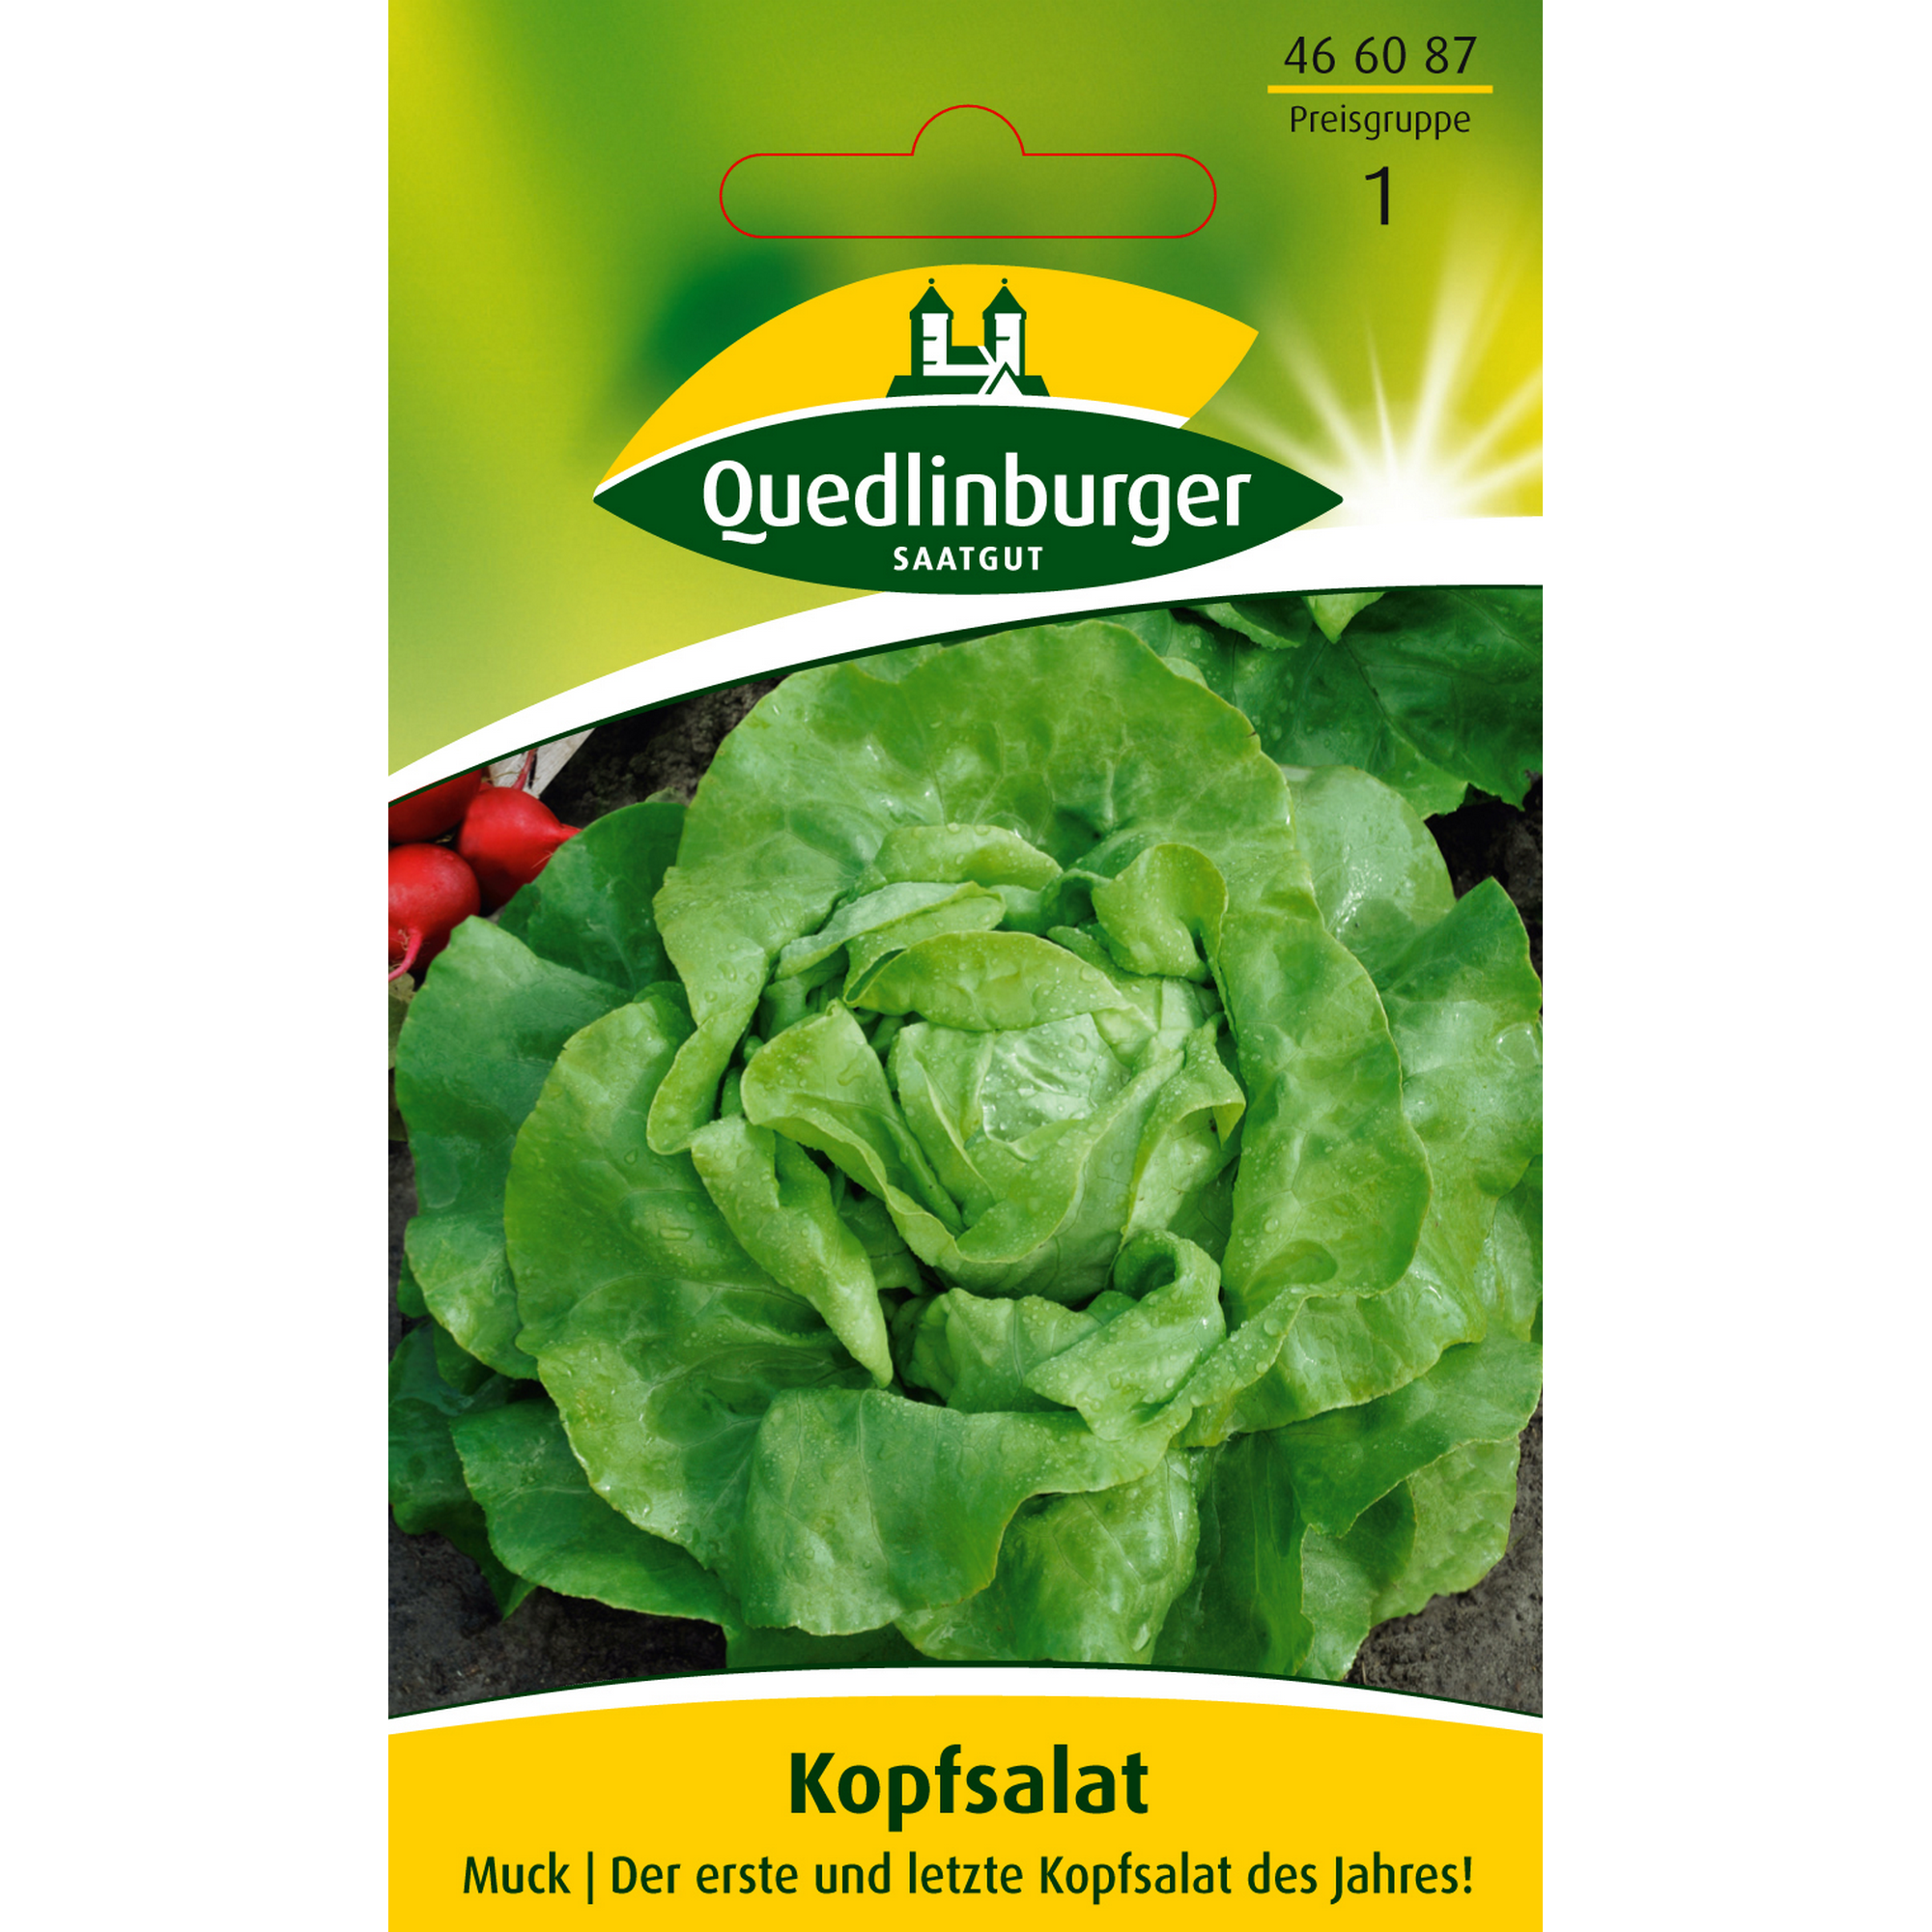 Kopfsalat 'Muck' + product picture